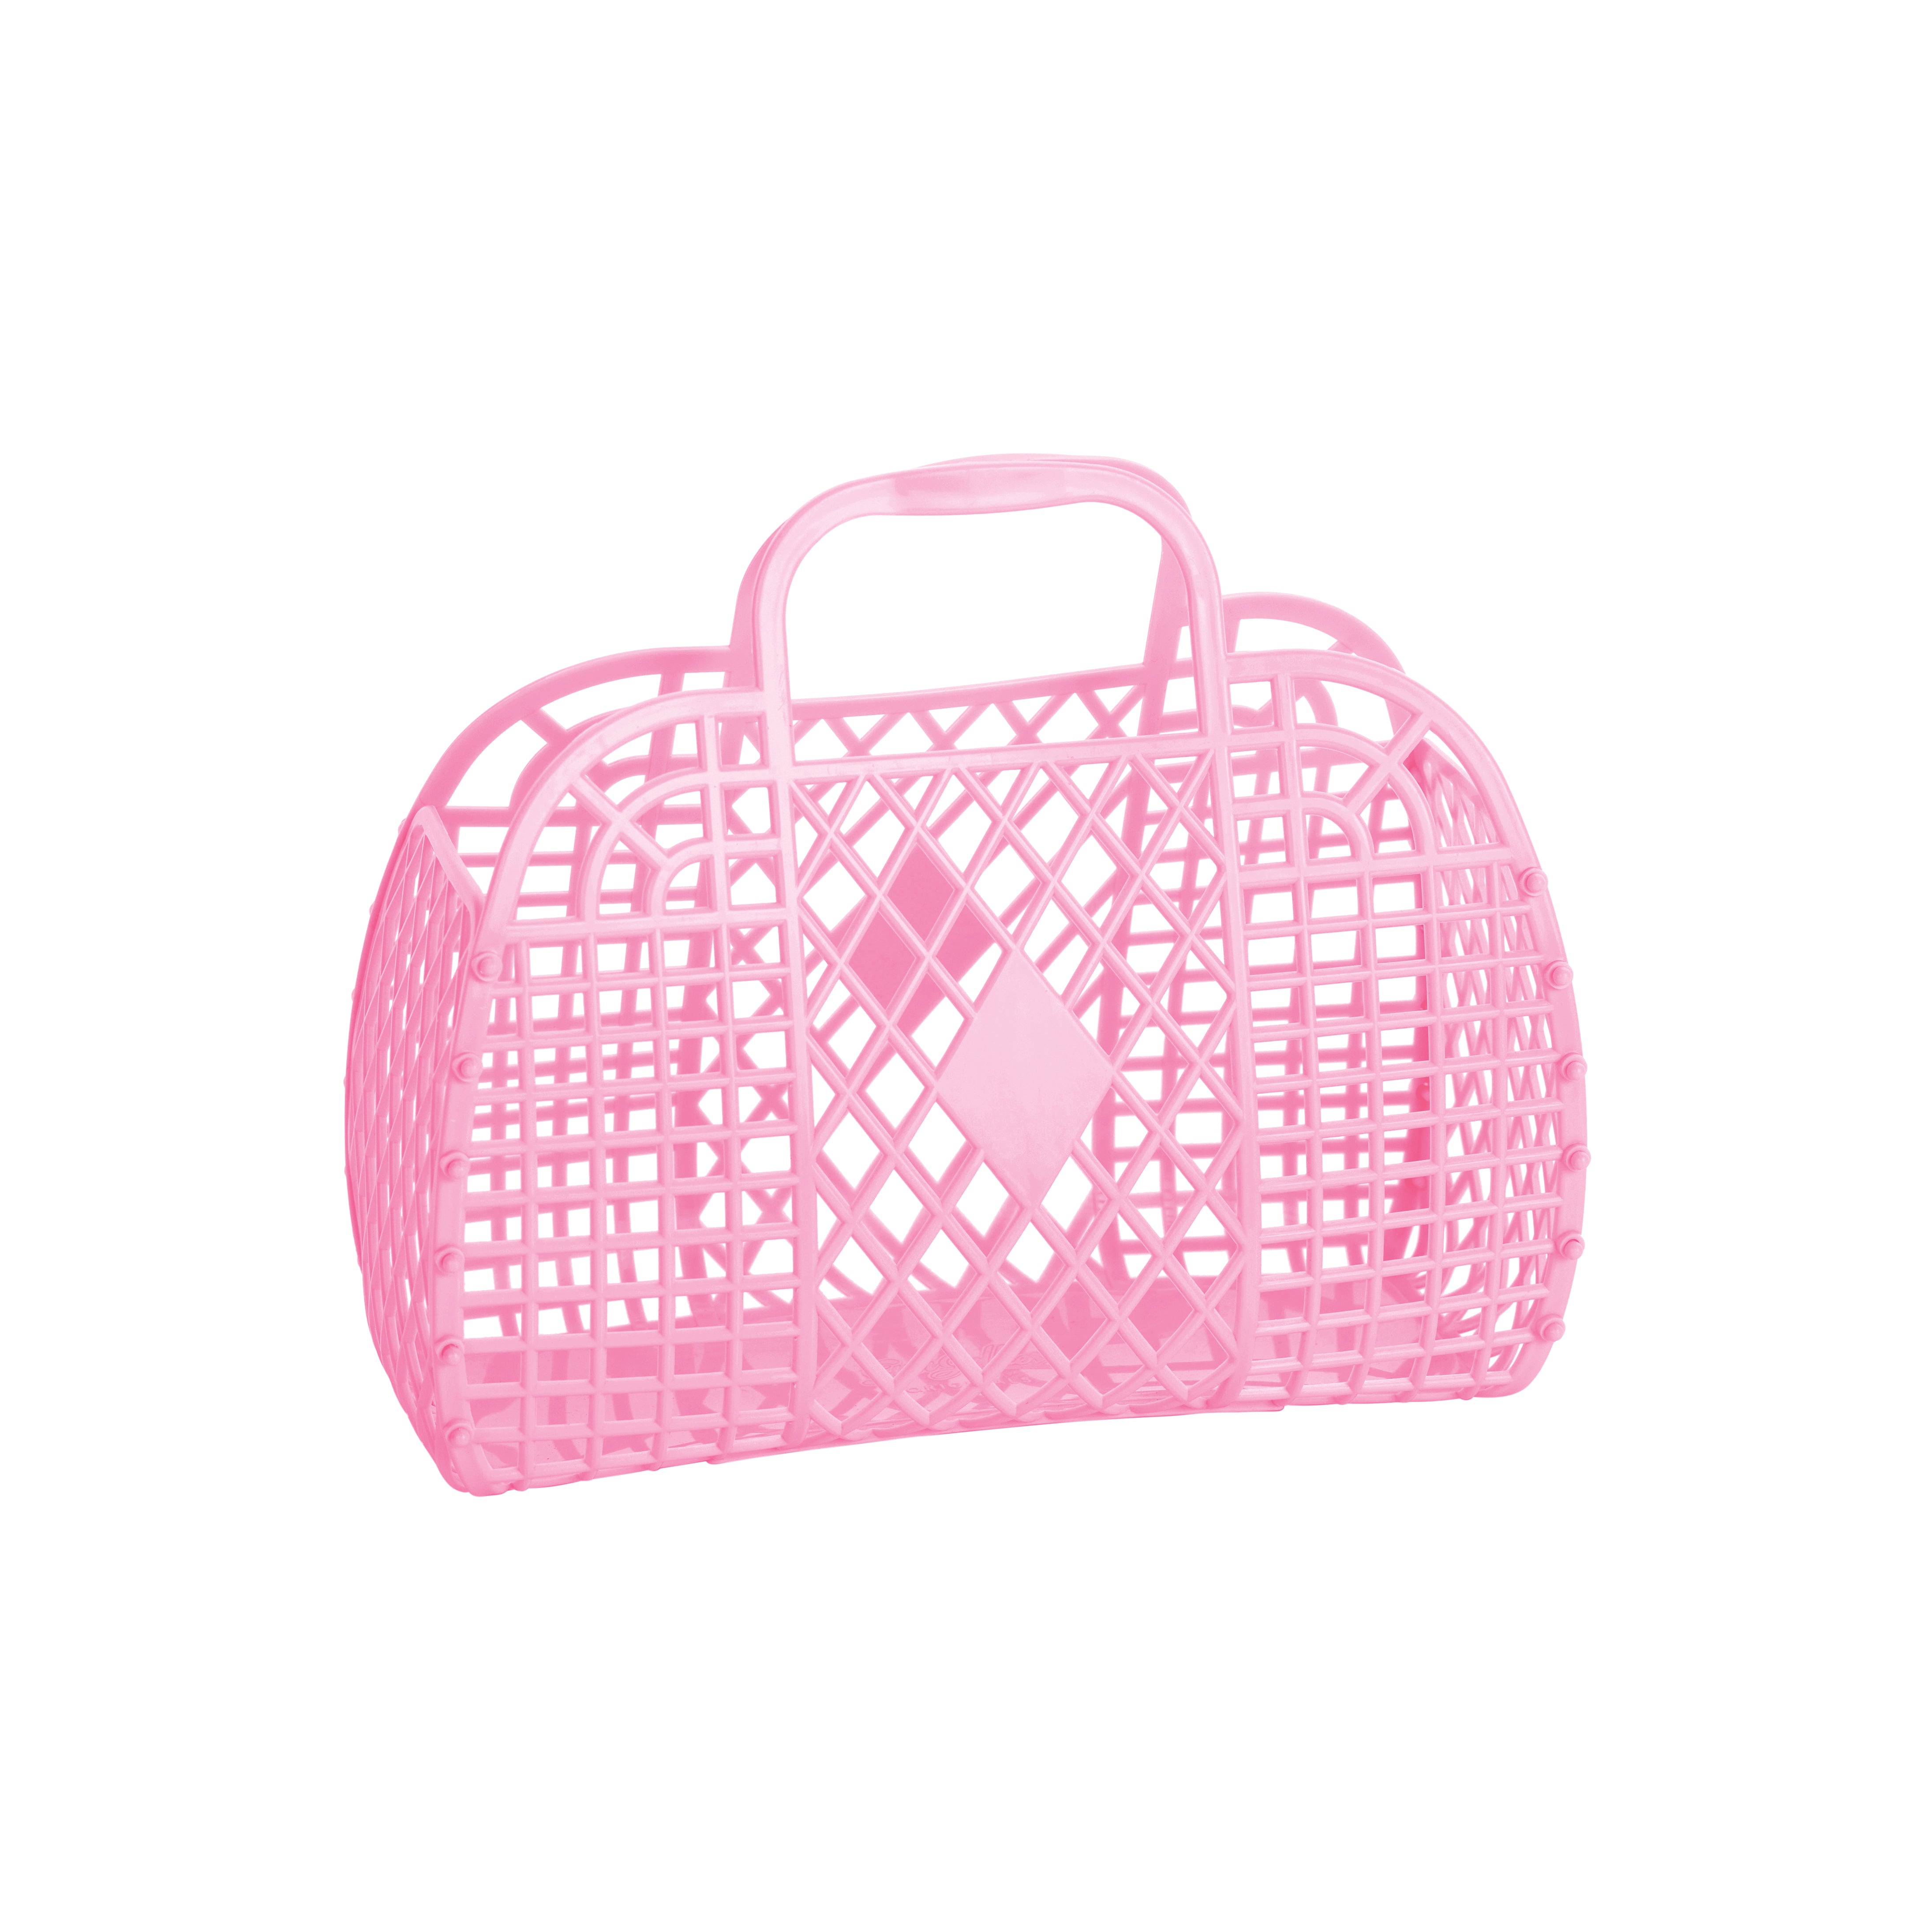 Sun Jellies Retro Basket in Bubblegum Pink - Small - Little birdies